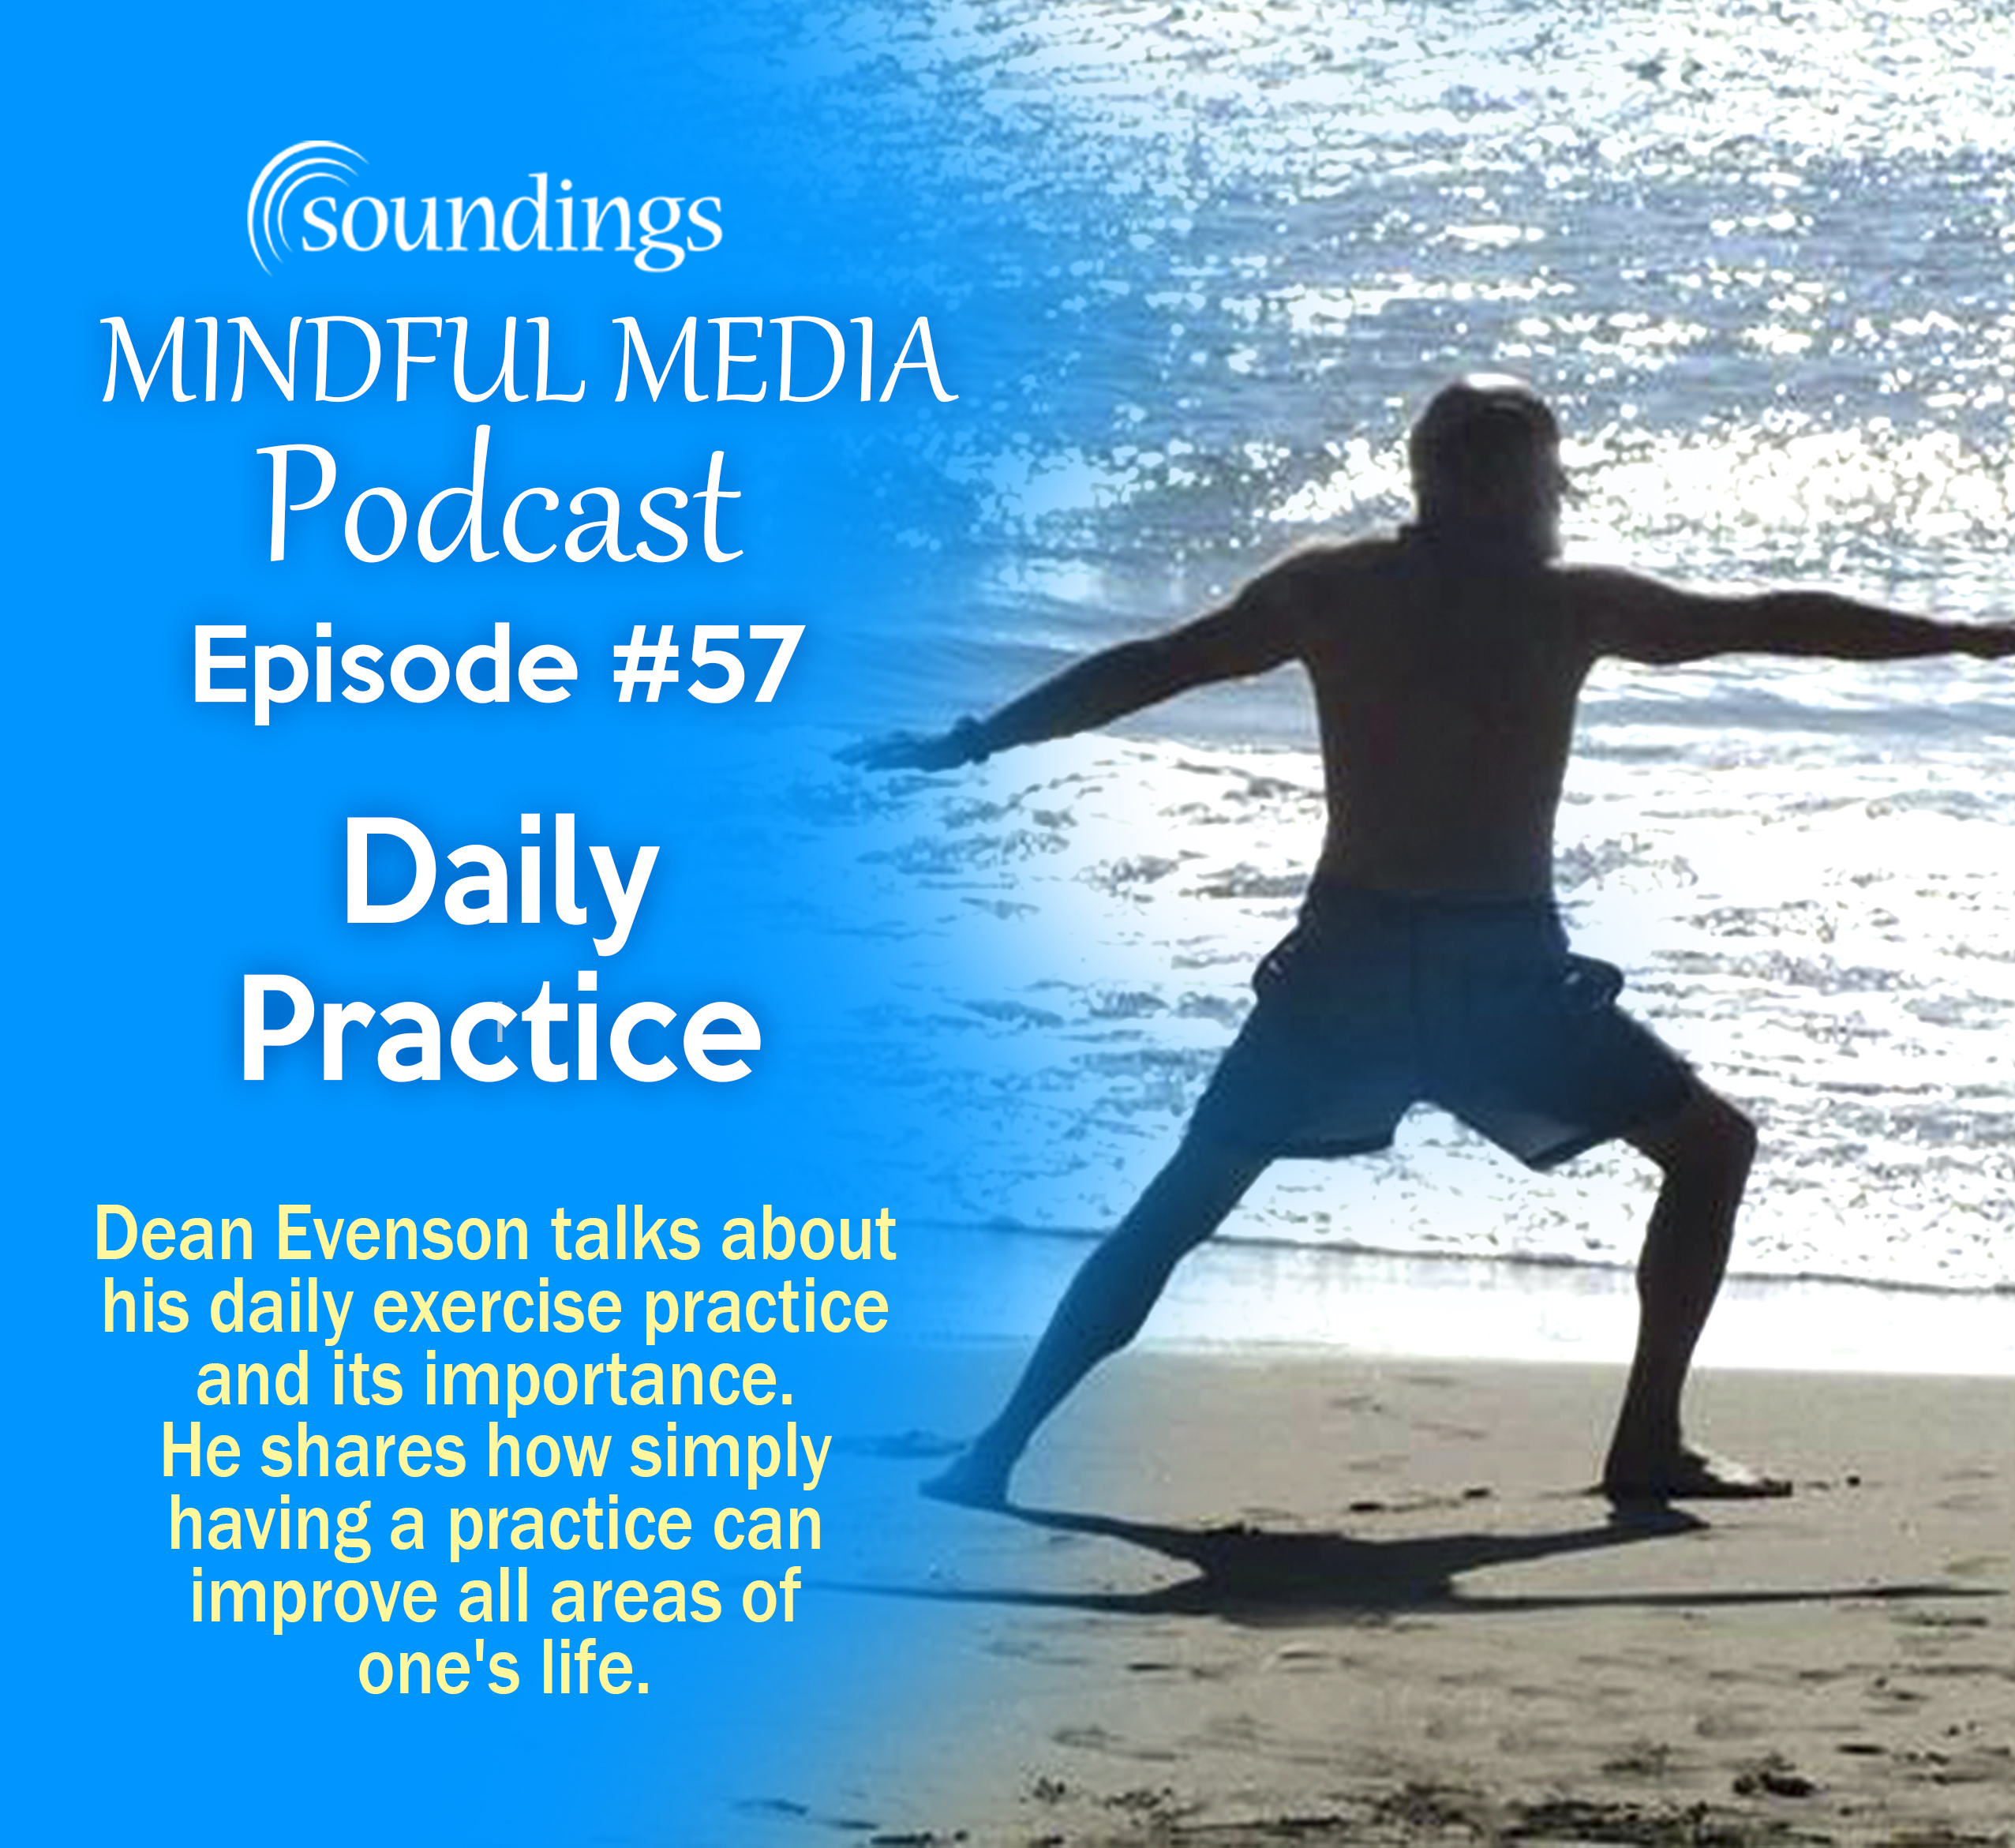 Dean Evenson Talks Daily Practice On Soundings Mindful Media Podcast